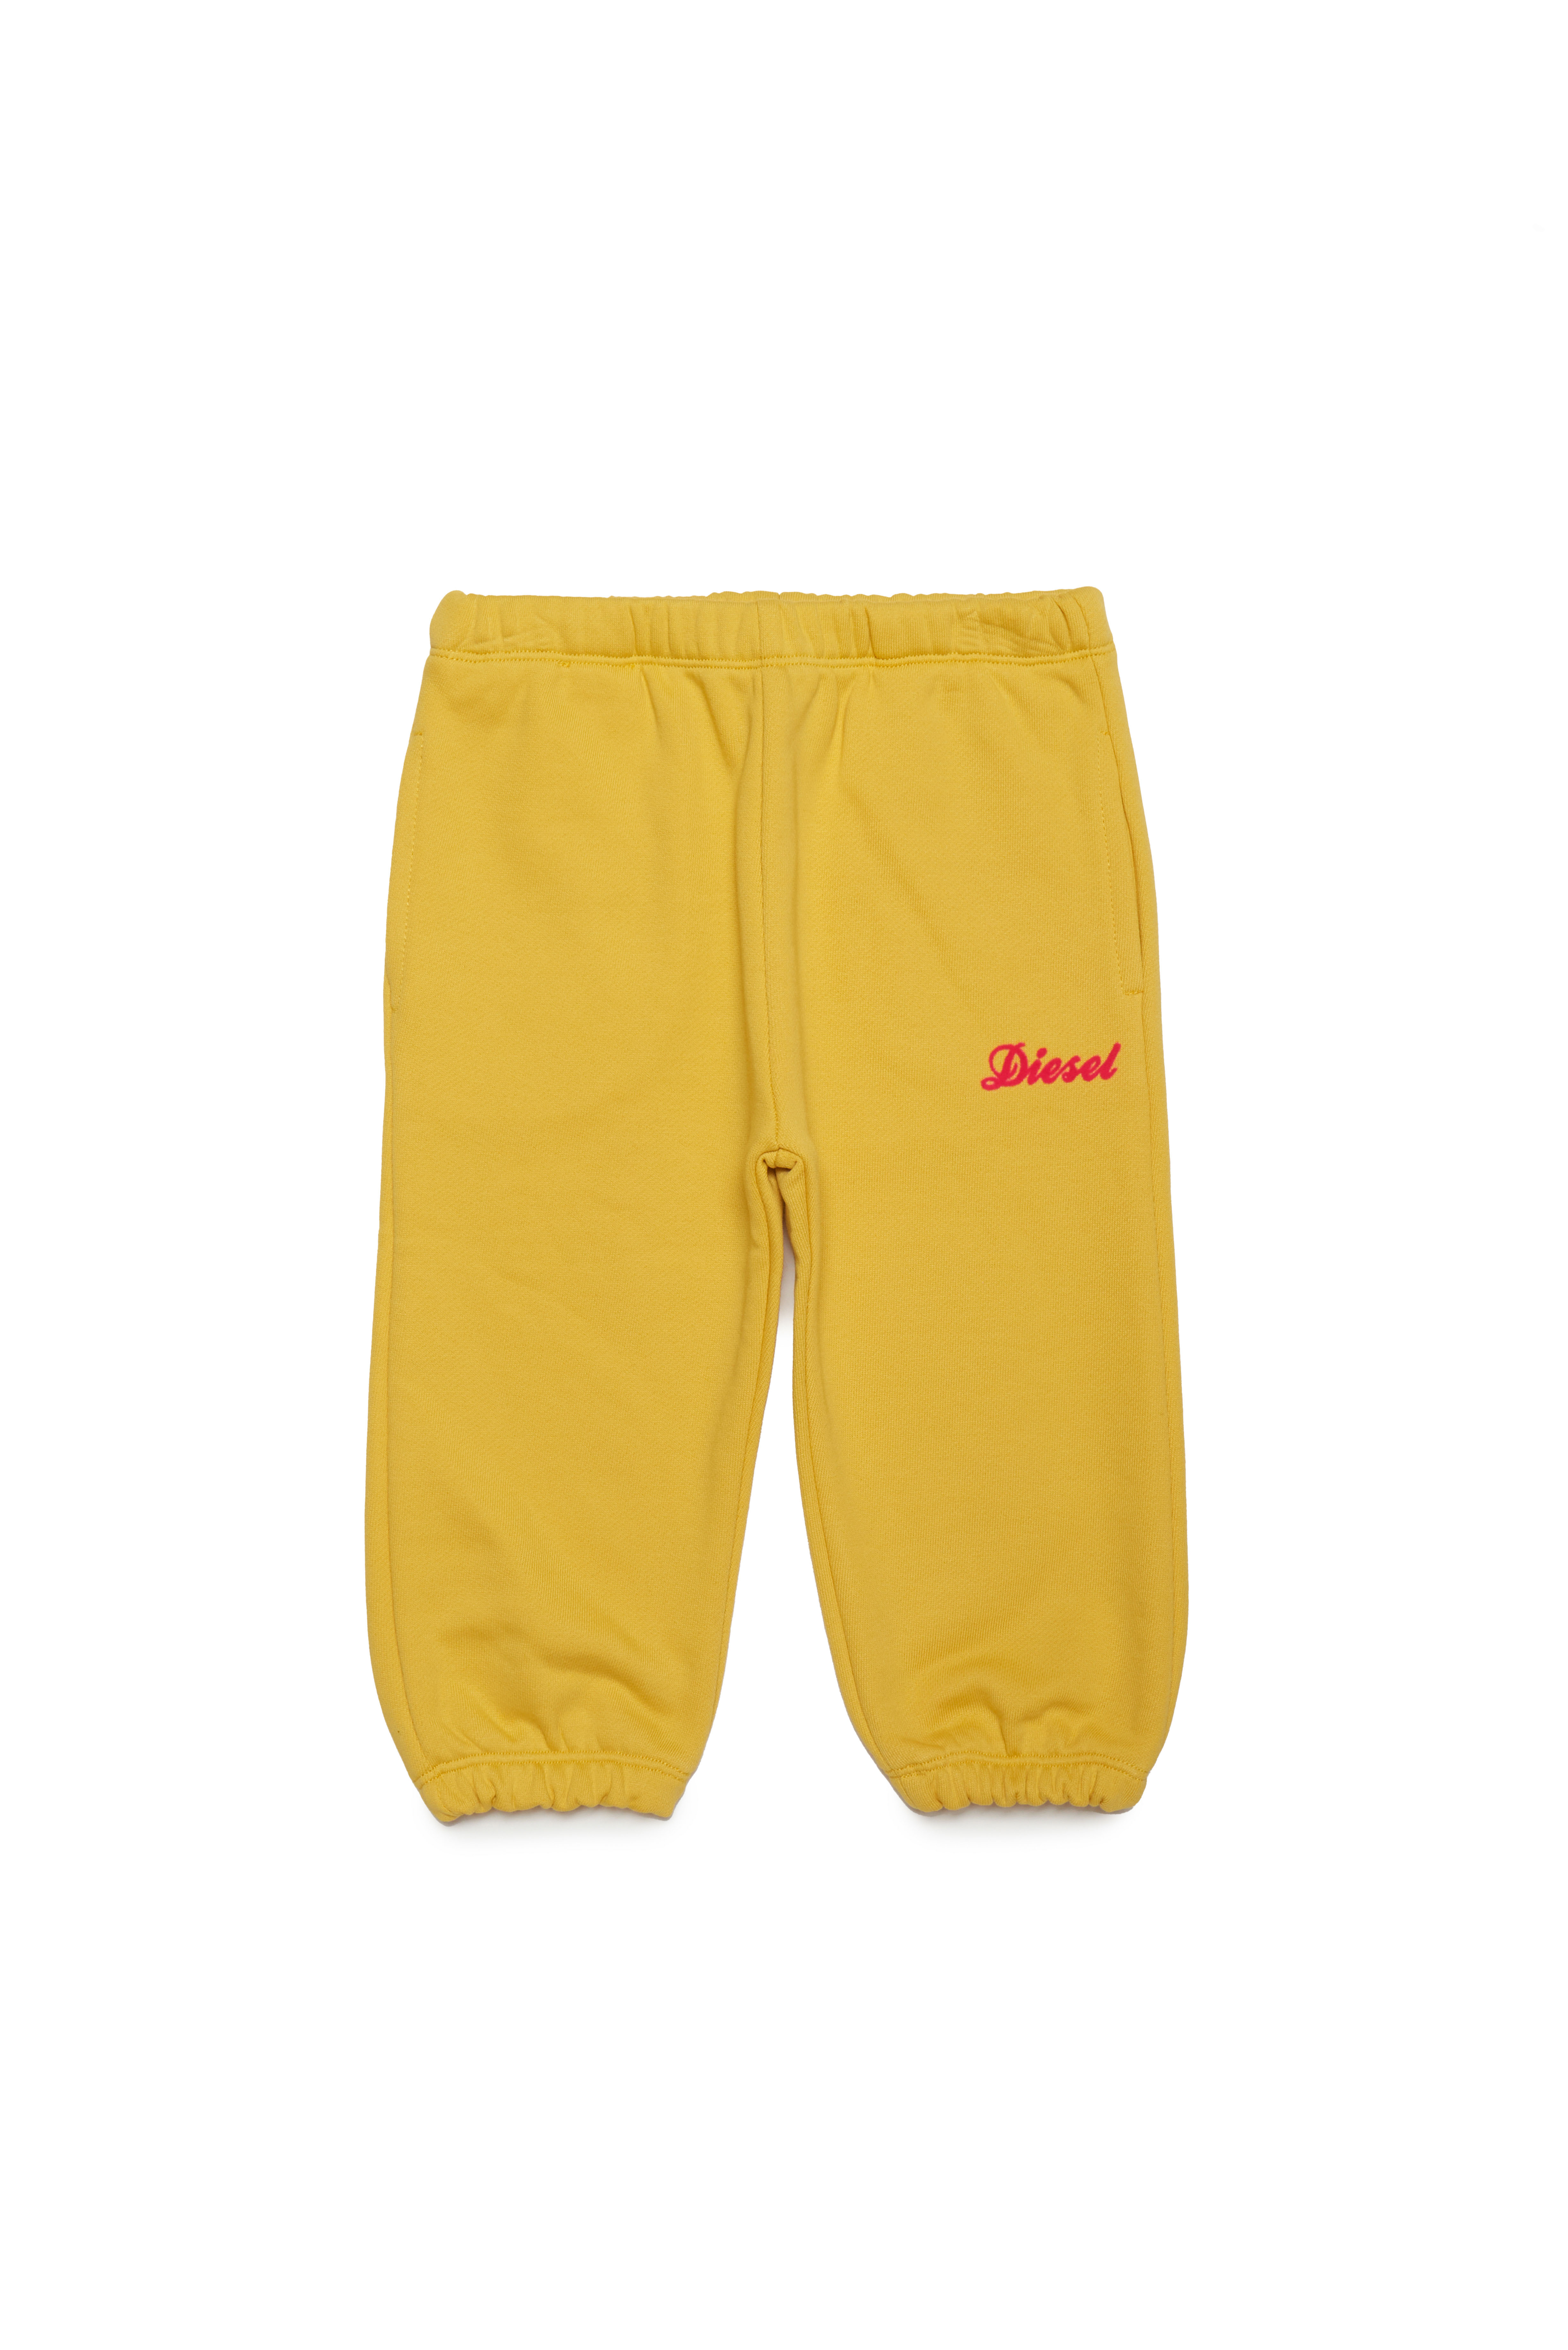 Diesel - Track pants with cursive Diesel logo - Pants - Woman - Yellow